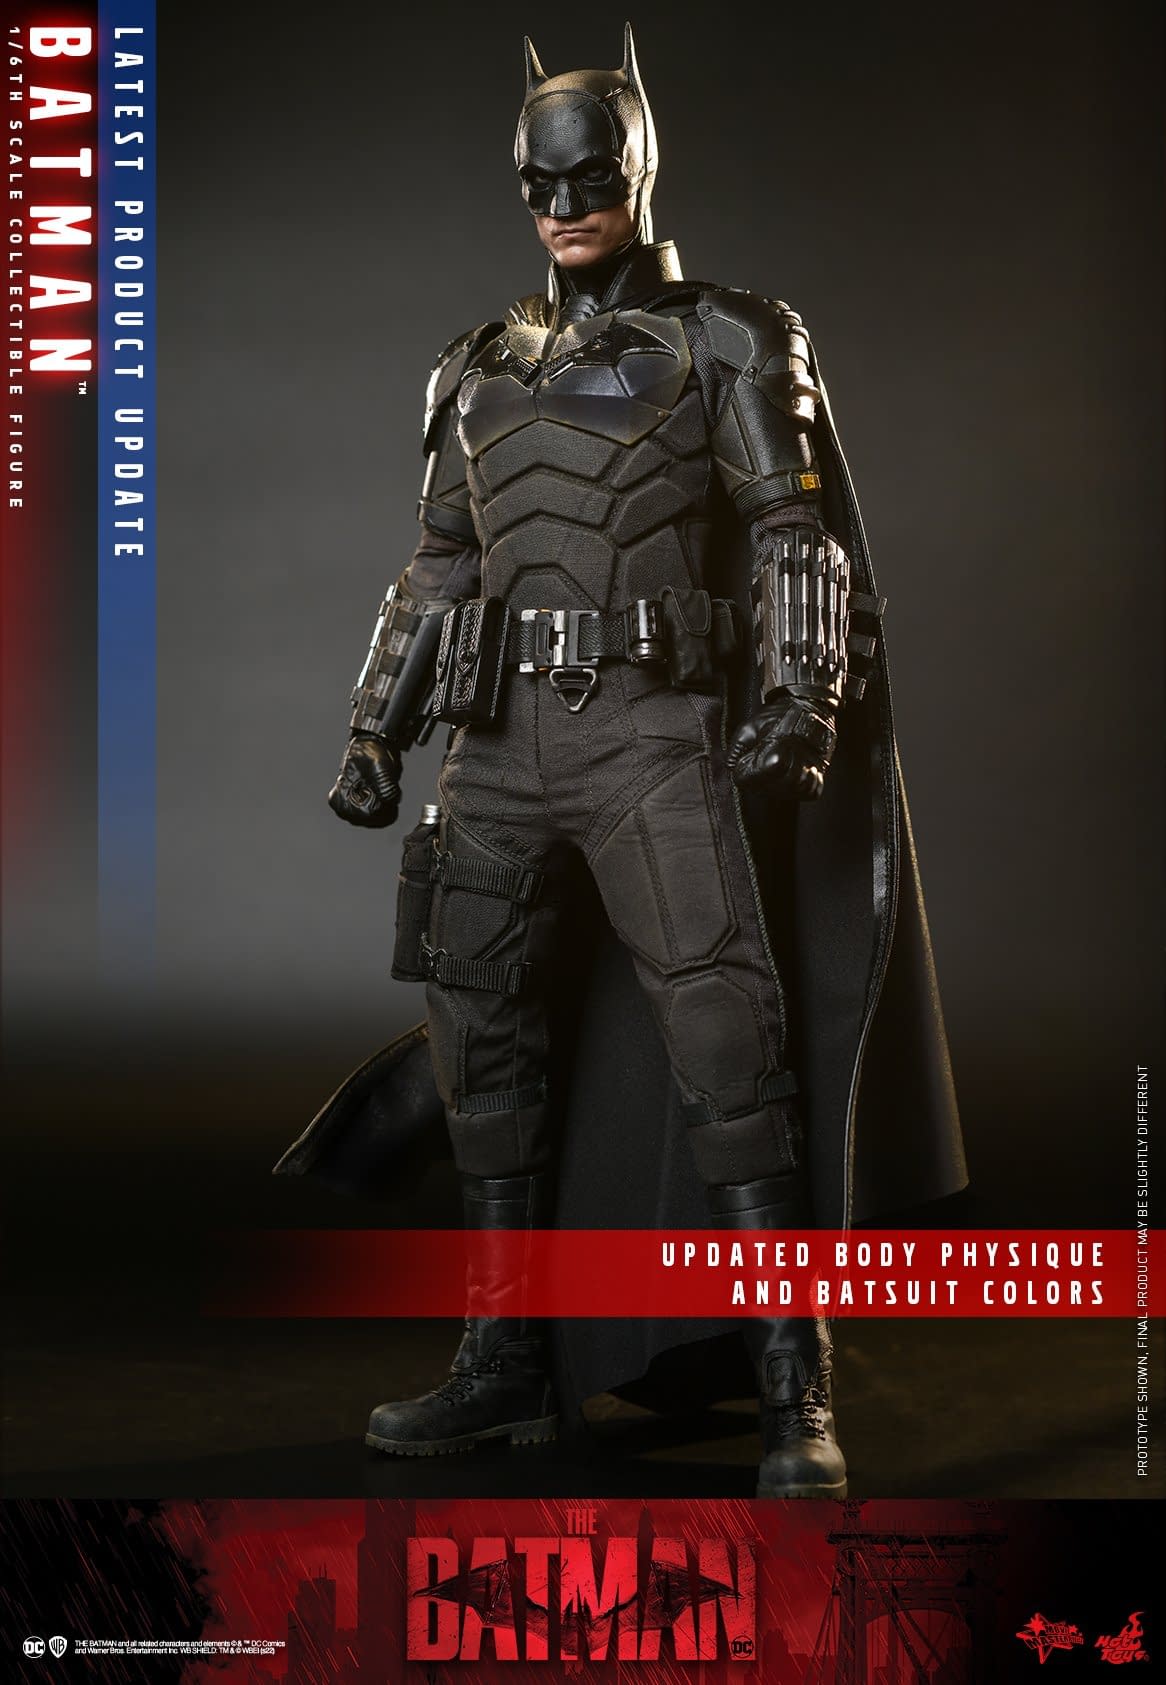 Hot-Toys-The-Batman-Update-003.jpg